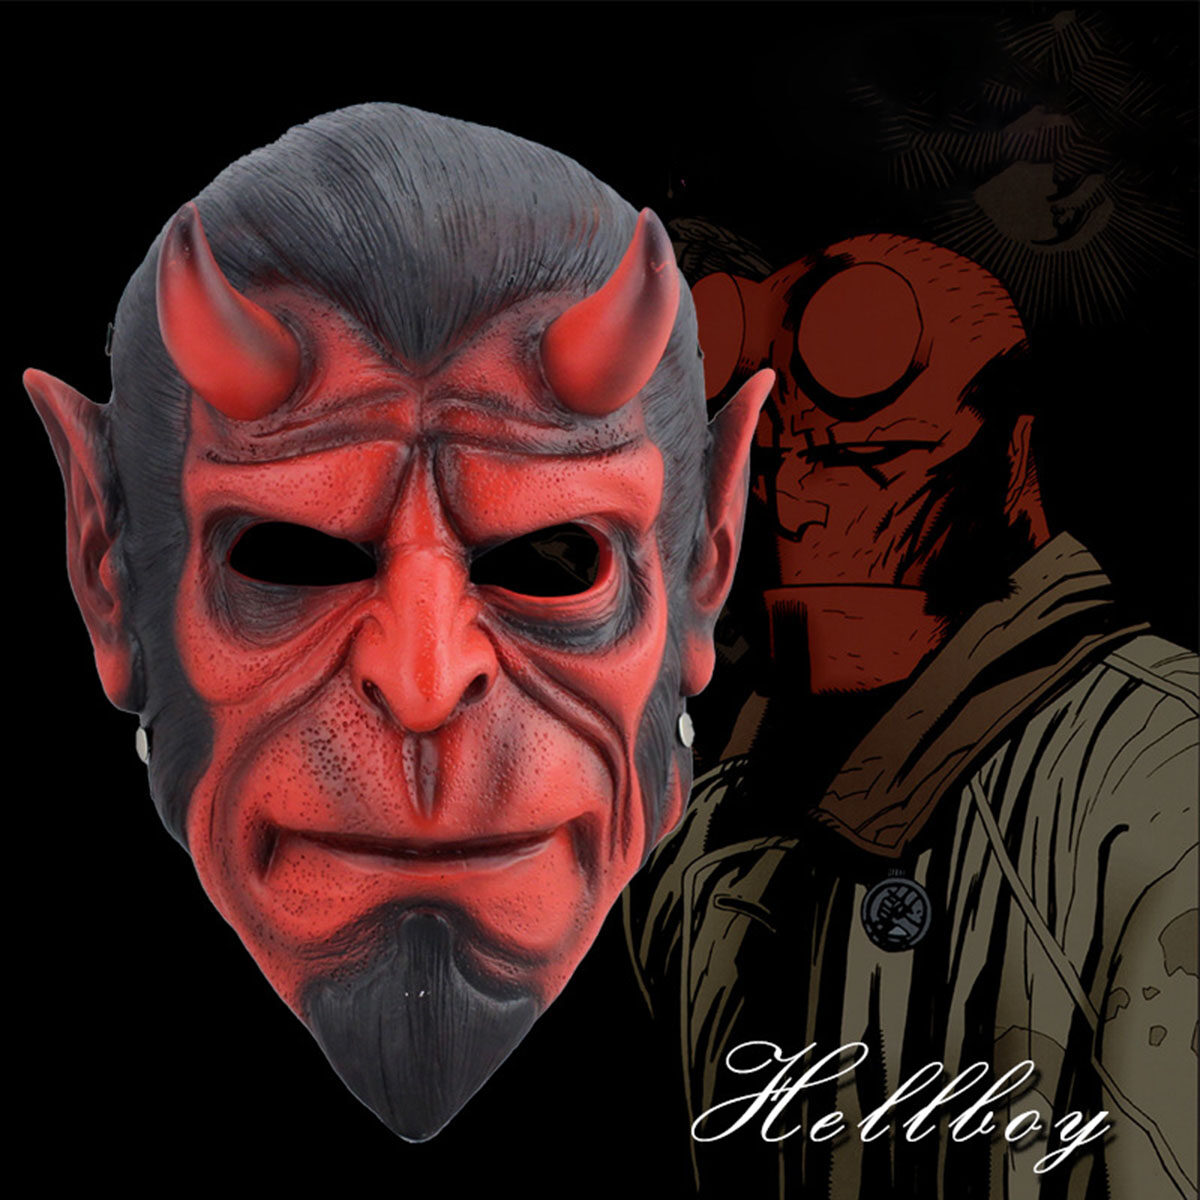 Mask หน้ากาก เดวิด ฮาร์เบอร์ จากหนัง Hellboy เฮลล์บอย วัสดุ ไฟเบอร์กลาส Fiberglass ป้องกัน สำหรับใส่ ปาร์ตี้ แฟนซี คอสเพลย์ สยองขวัญ สุดโหด 
ฮอกกี้ หมวก บีบีกัน ฮาโลวีน รักบี้ Horror Cosplay Hockey Hat Marvel DC BBGUN Halloween Party Fancy Rugby